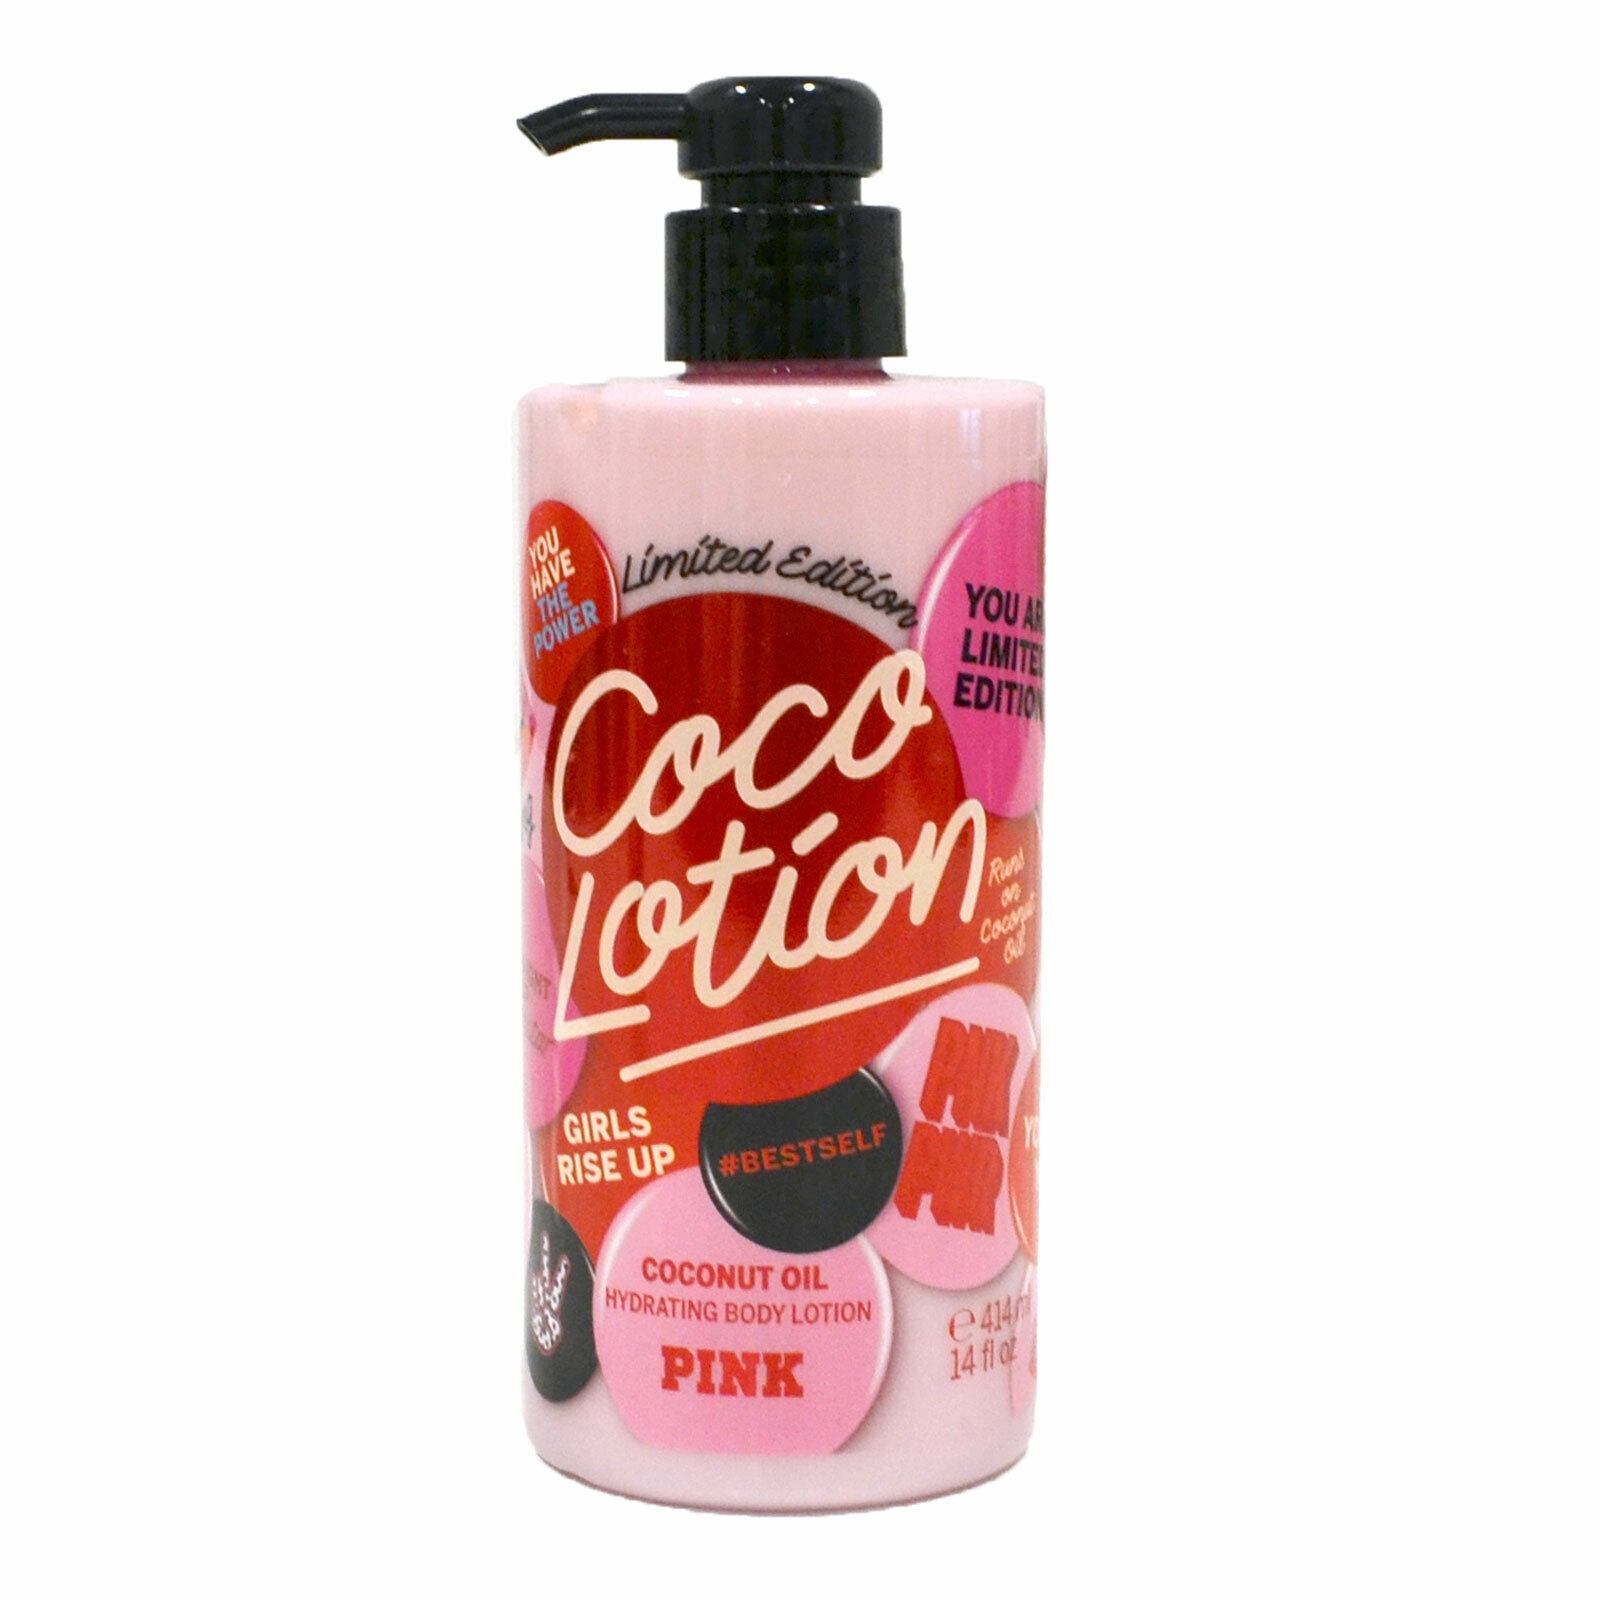 Victoria's Secret Pink Body Lotion Scented Moisturizing Cream Skin Care New  Vs Size:14 fl oz Fragrance:Coco Lotion - Limited Edition